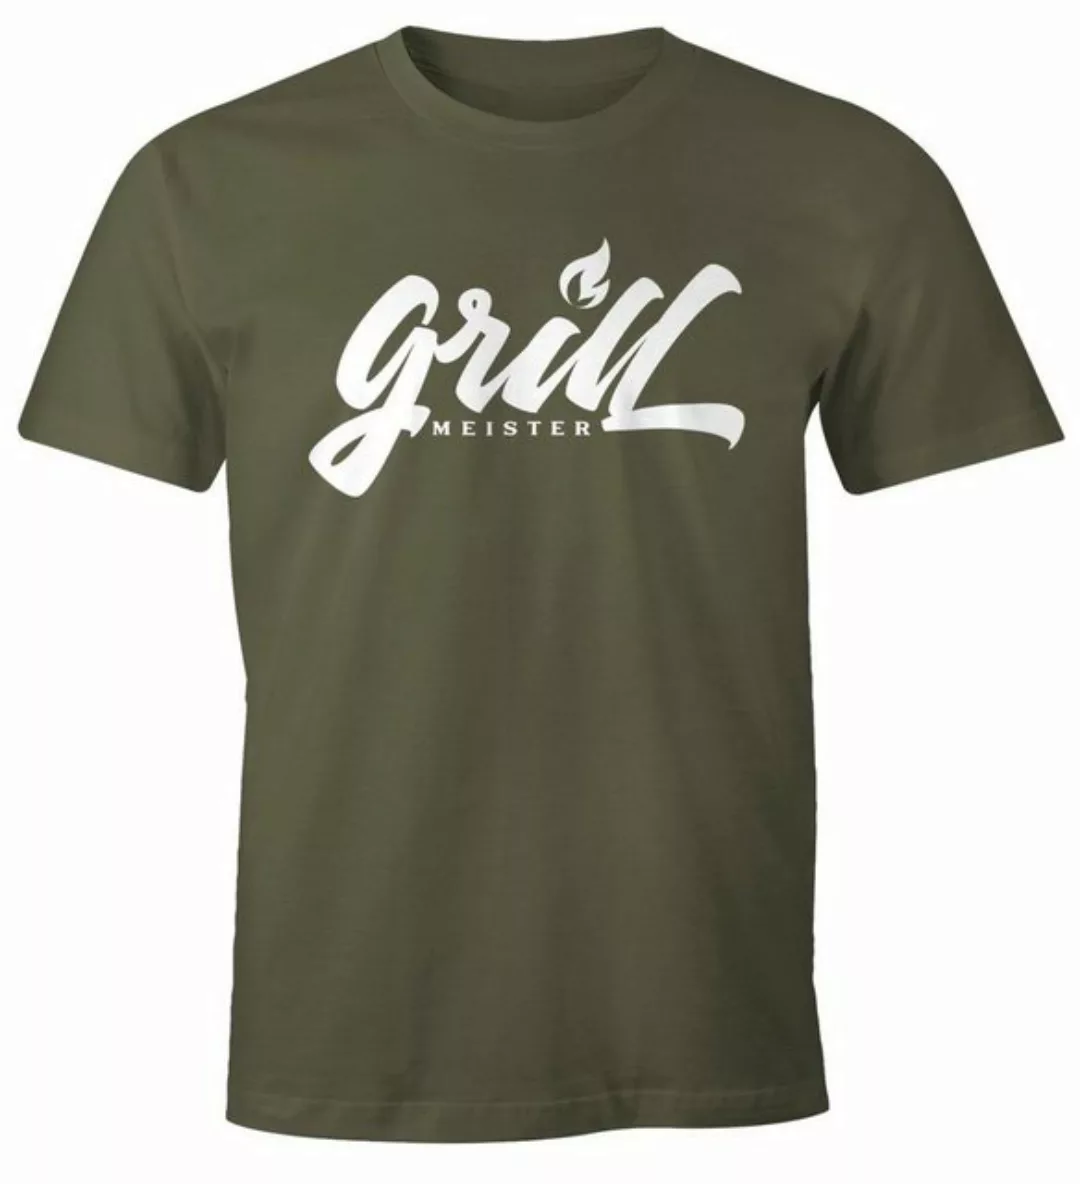 MoonWorks Print-Shirt Herren T-Shirt Grillmeister Fun-Shirt Grillen Barbecu günstig online kaufen